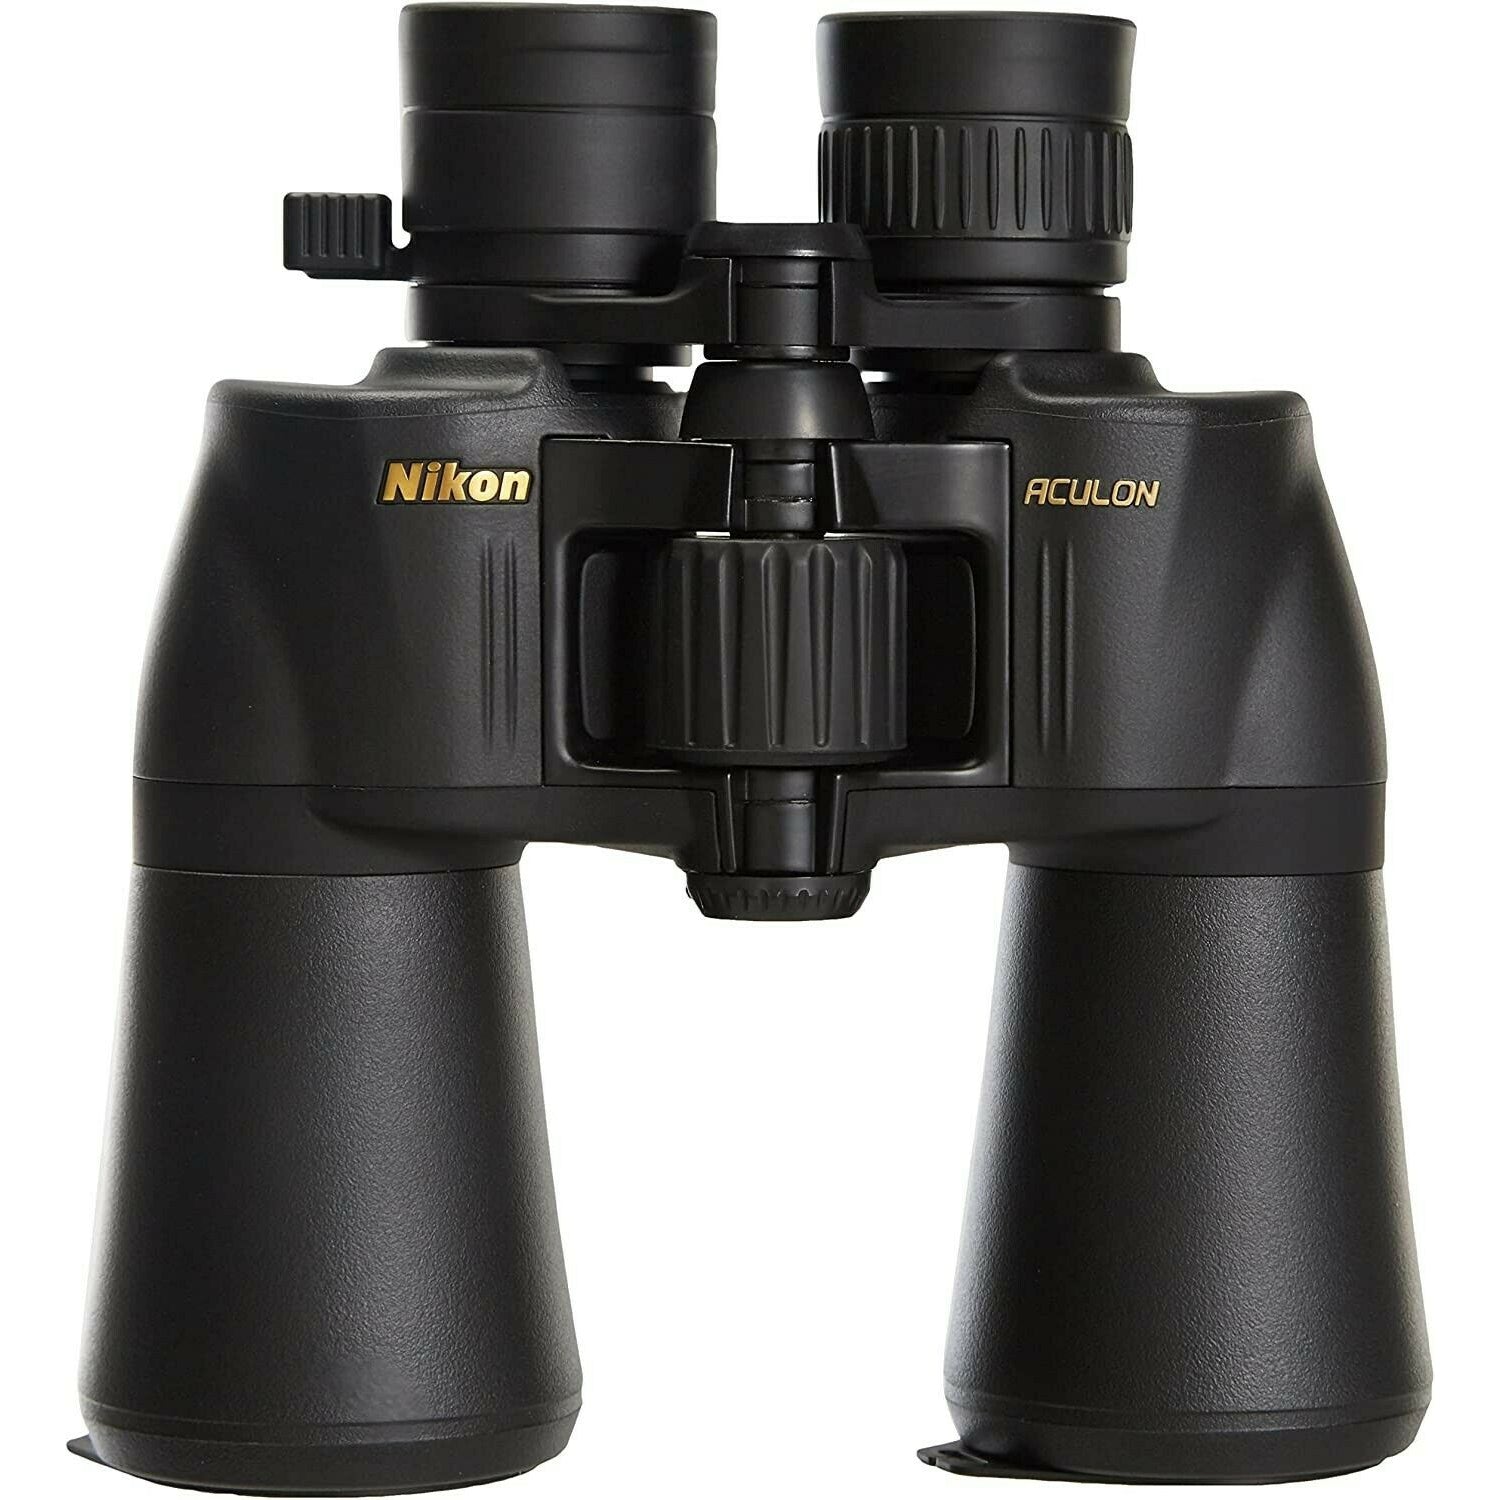 NIKON Aculon A211 Zoom Model 10-22 x 50 mm Porro Prism Binoculars